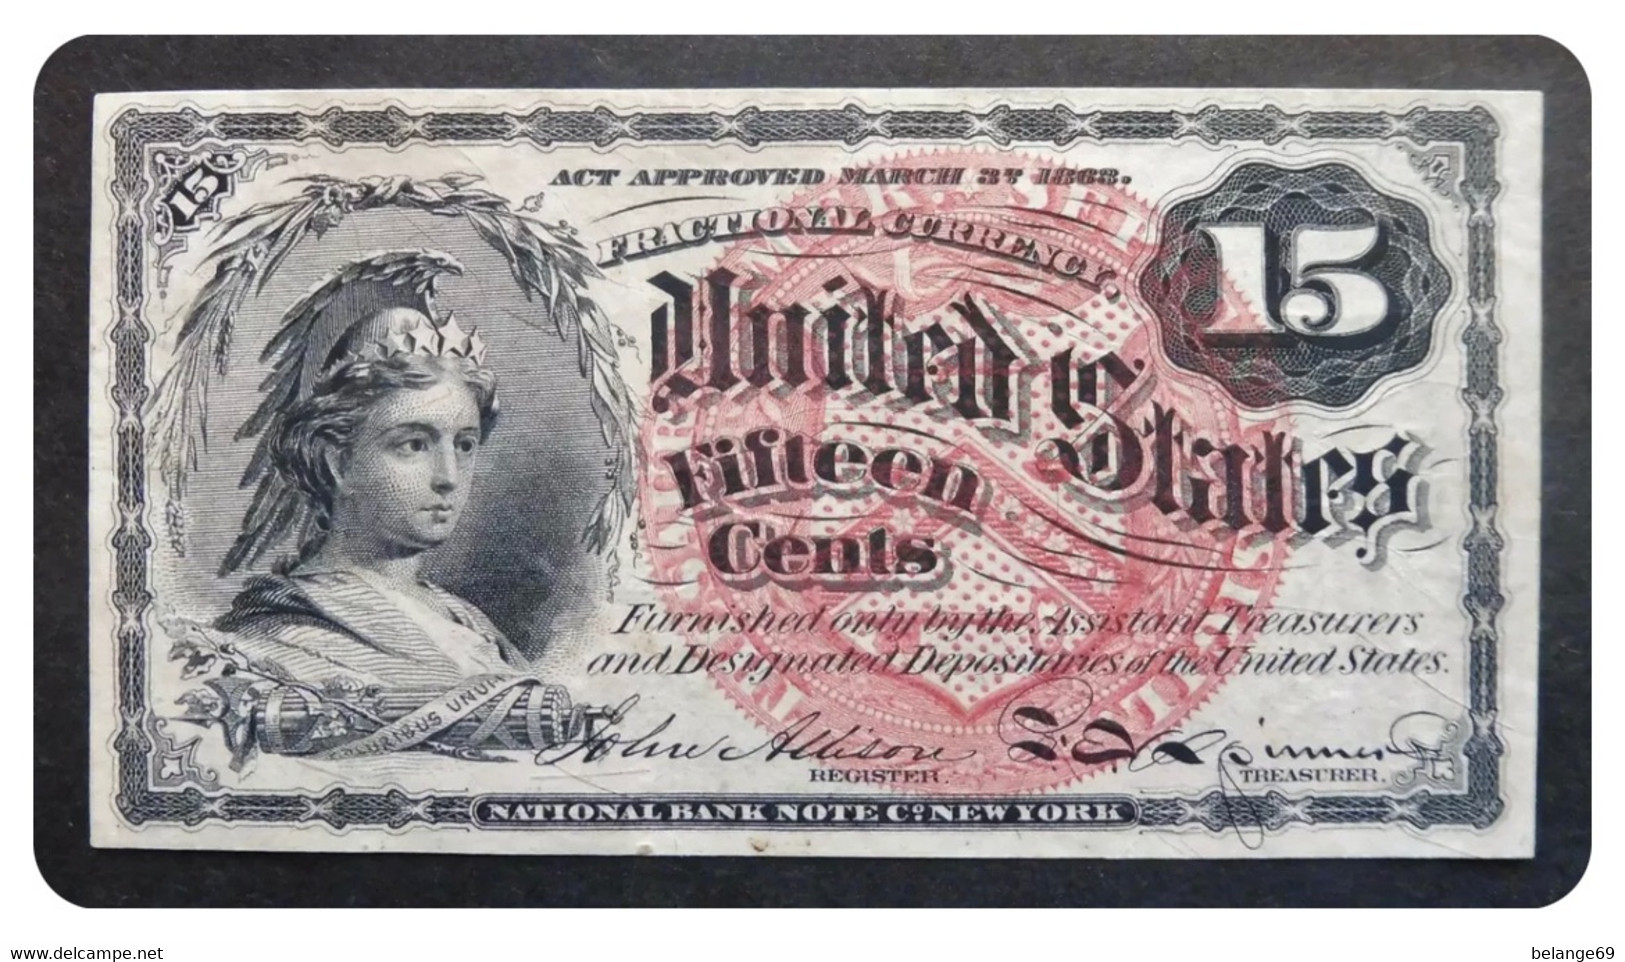 Etats Unis D'Amérique - 15 Cents - 3 Mars 1863 - Biljetten Van De Verenigde Staten (1862-1923)